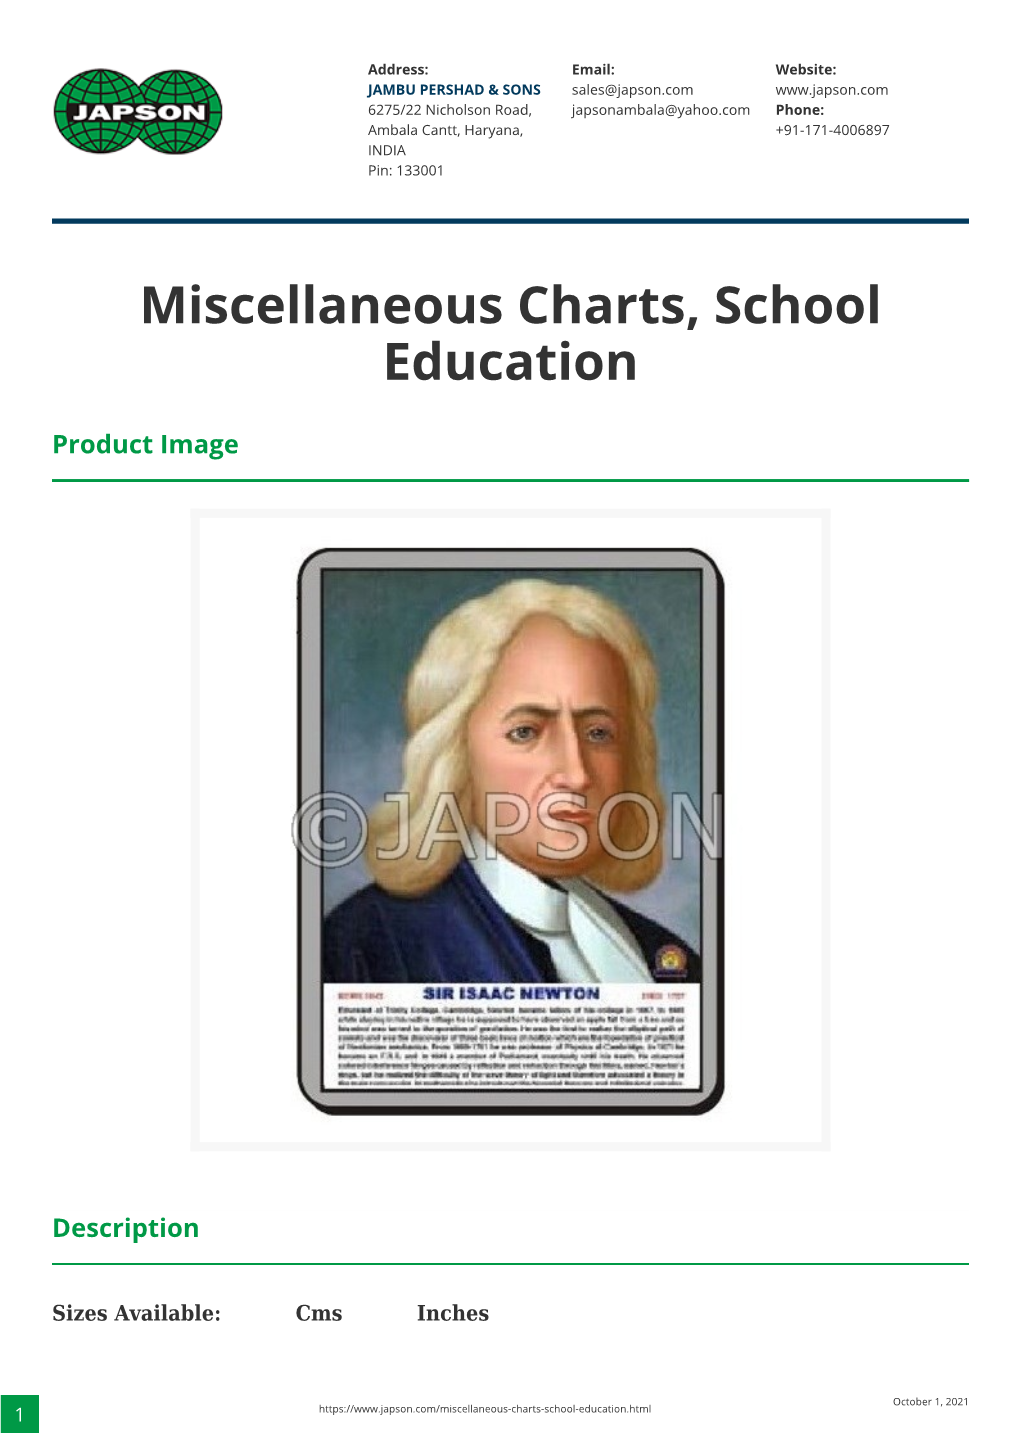 Miscellaneous Charts, School Education